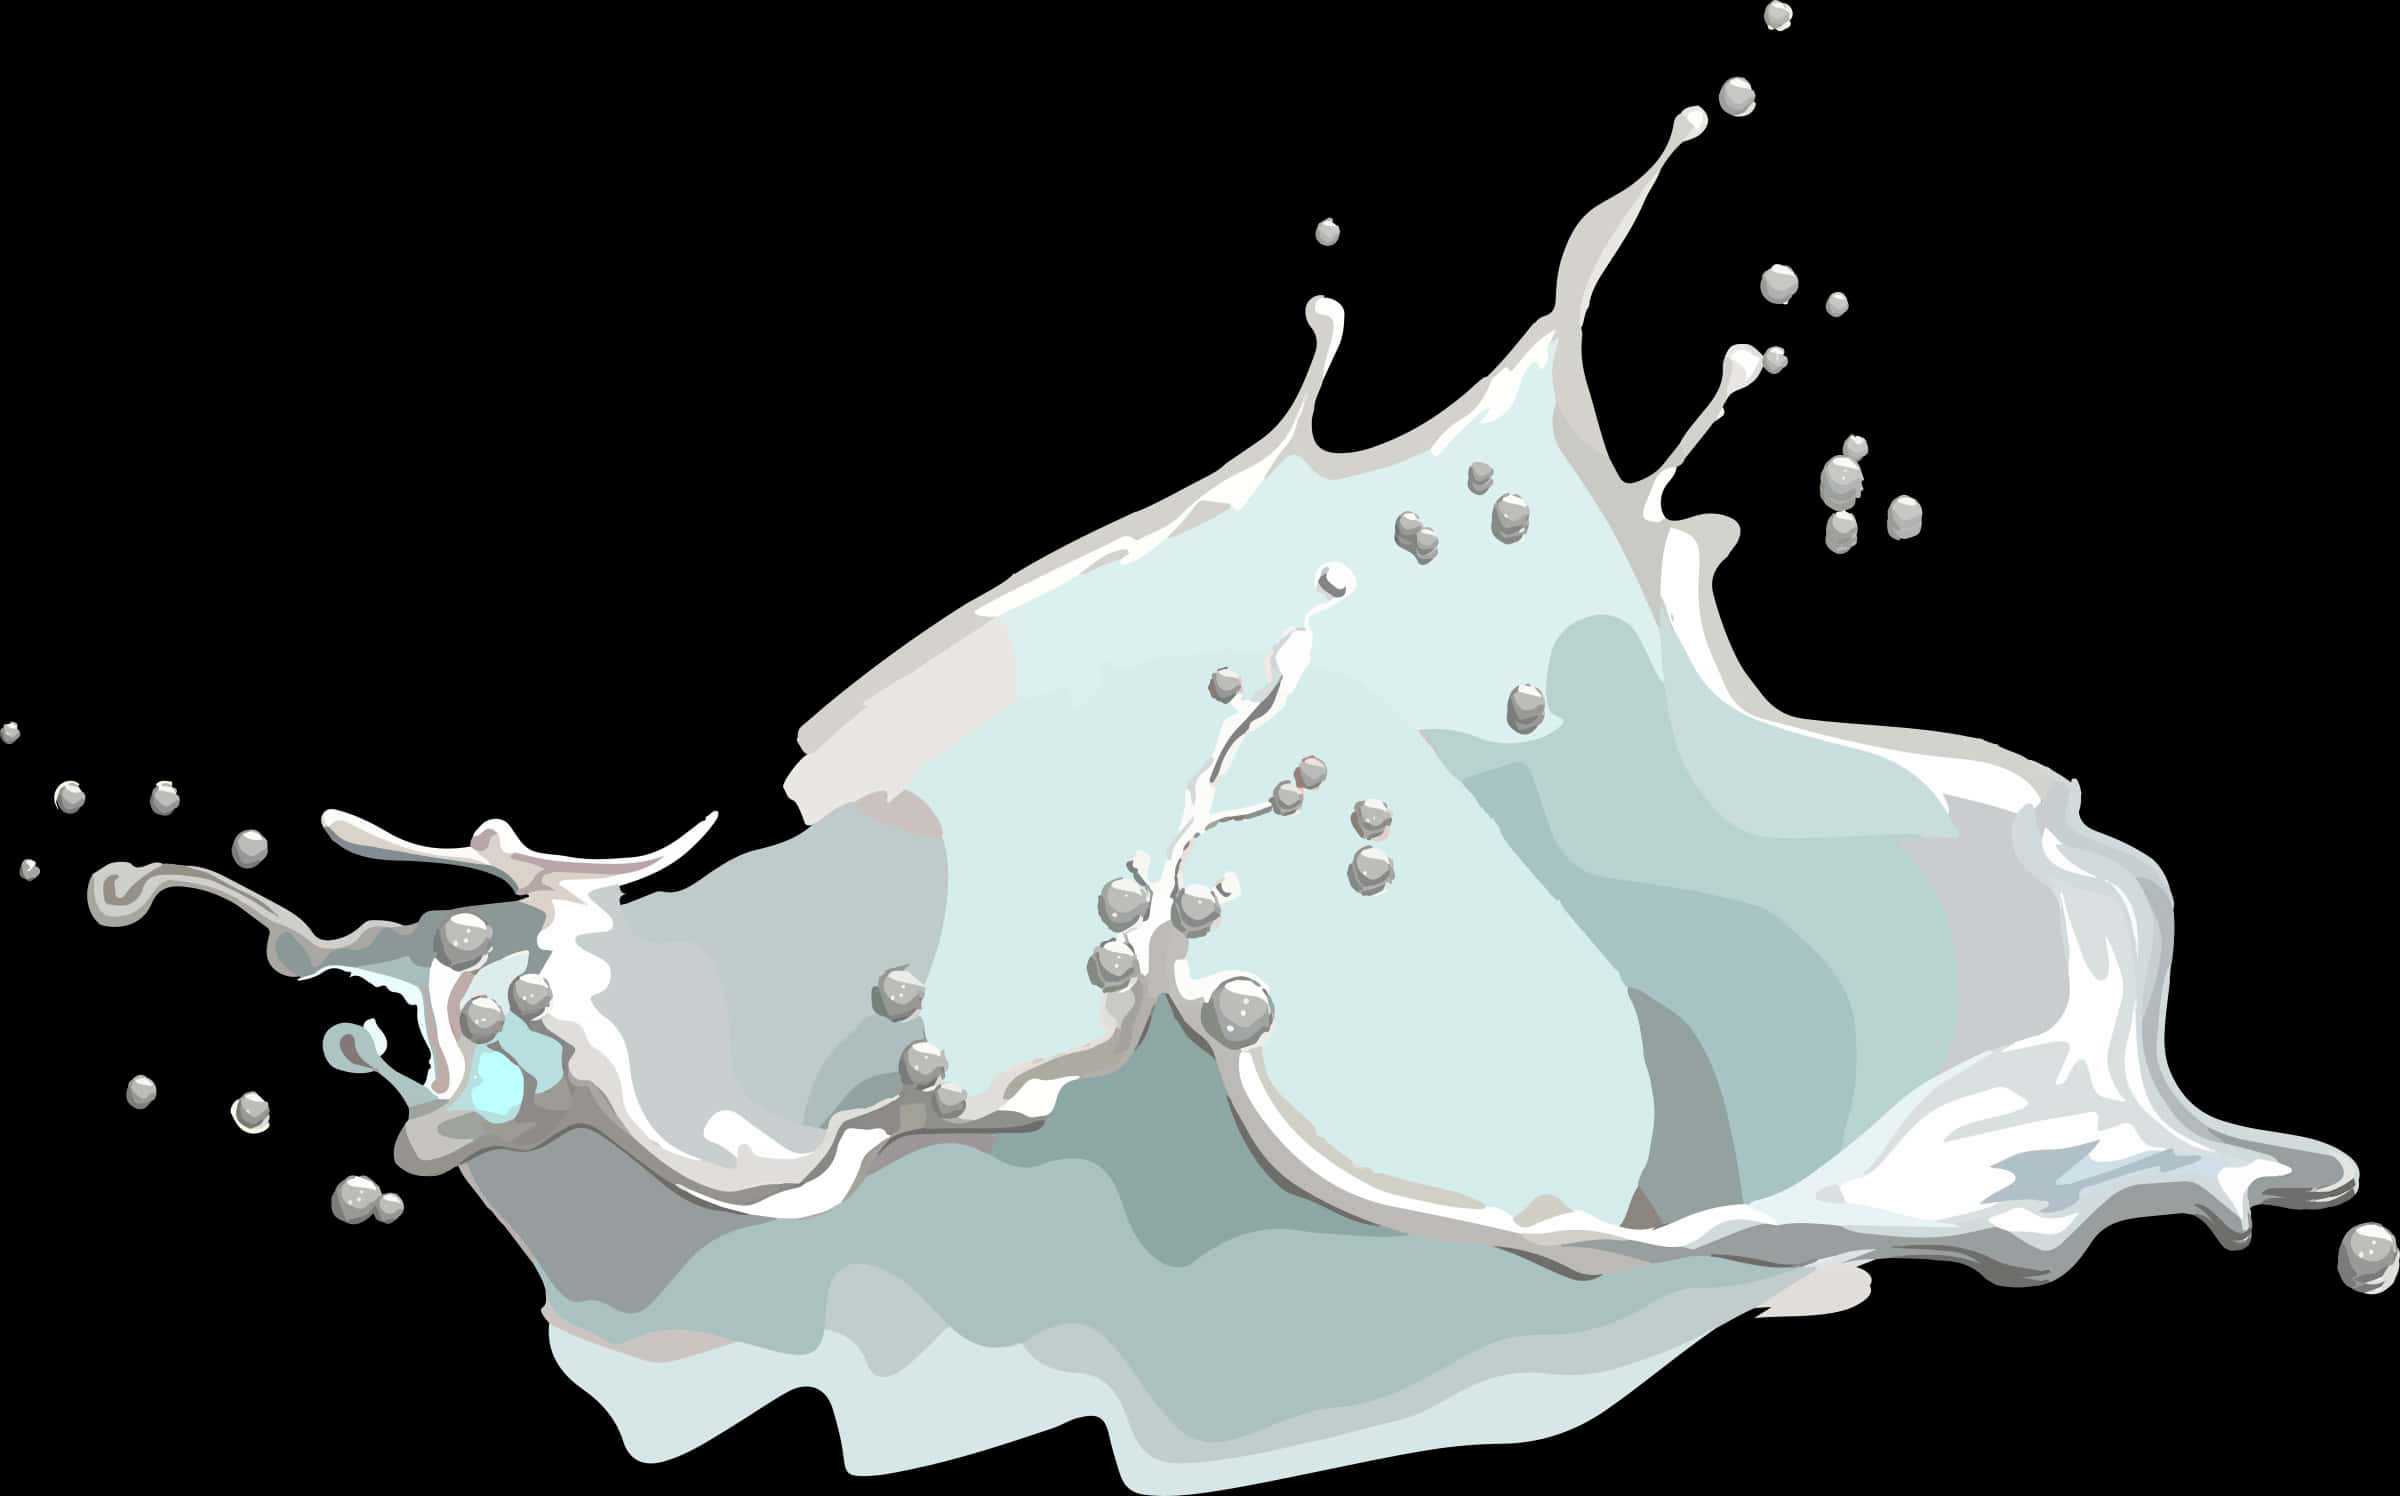 Dynamic Water Splash Illustration PNG image